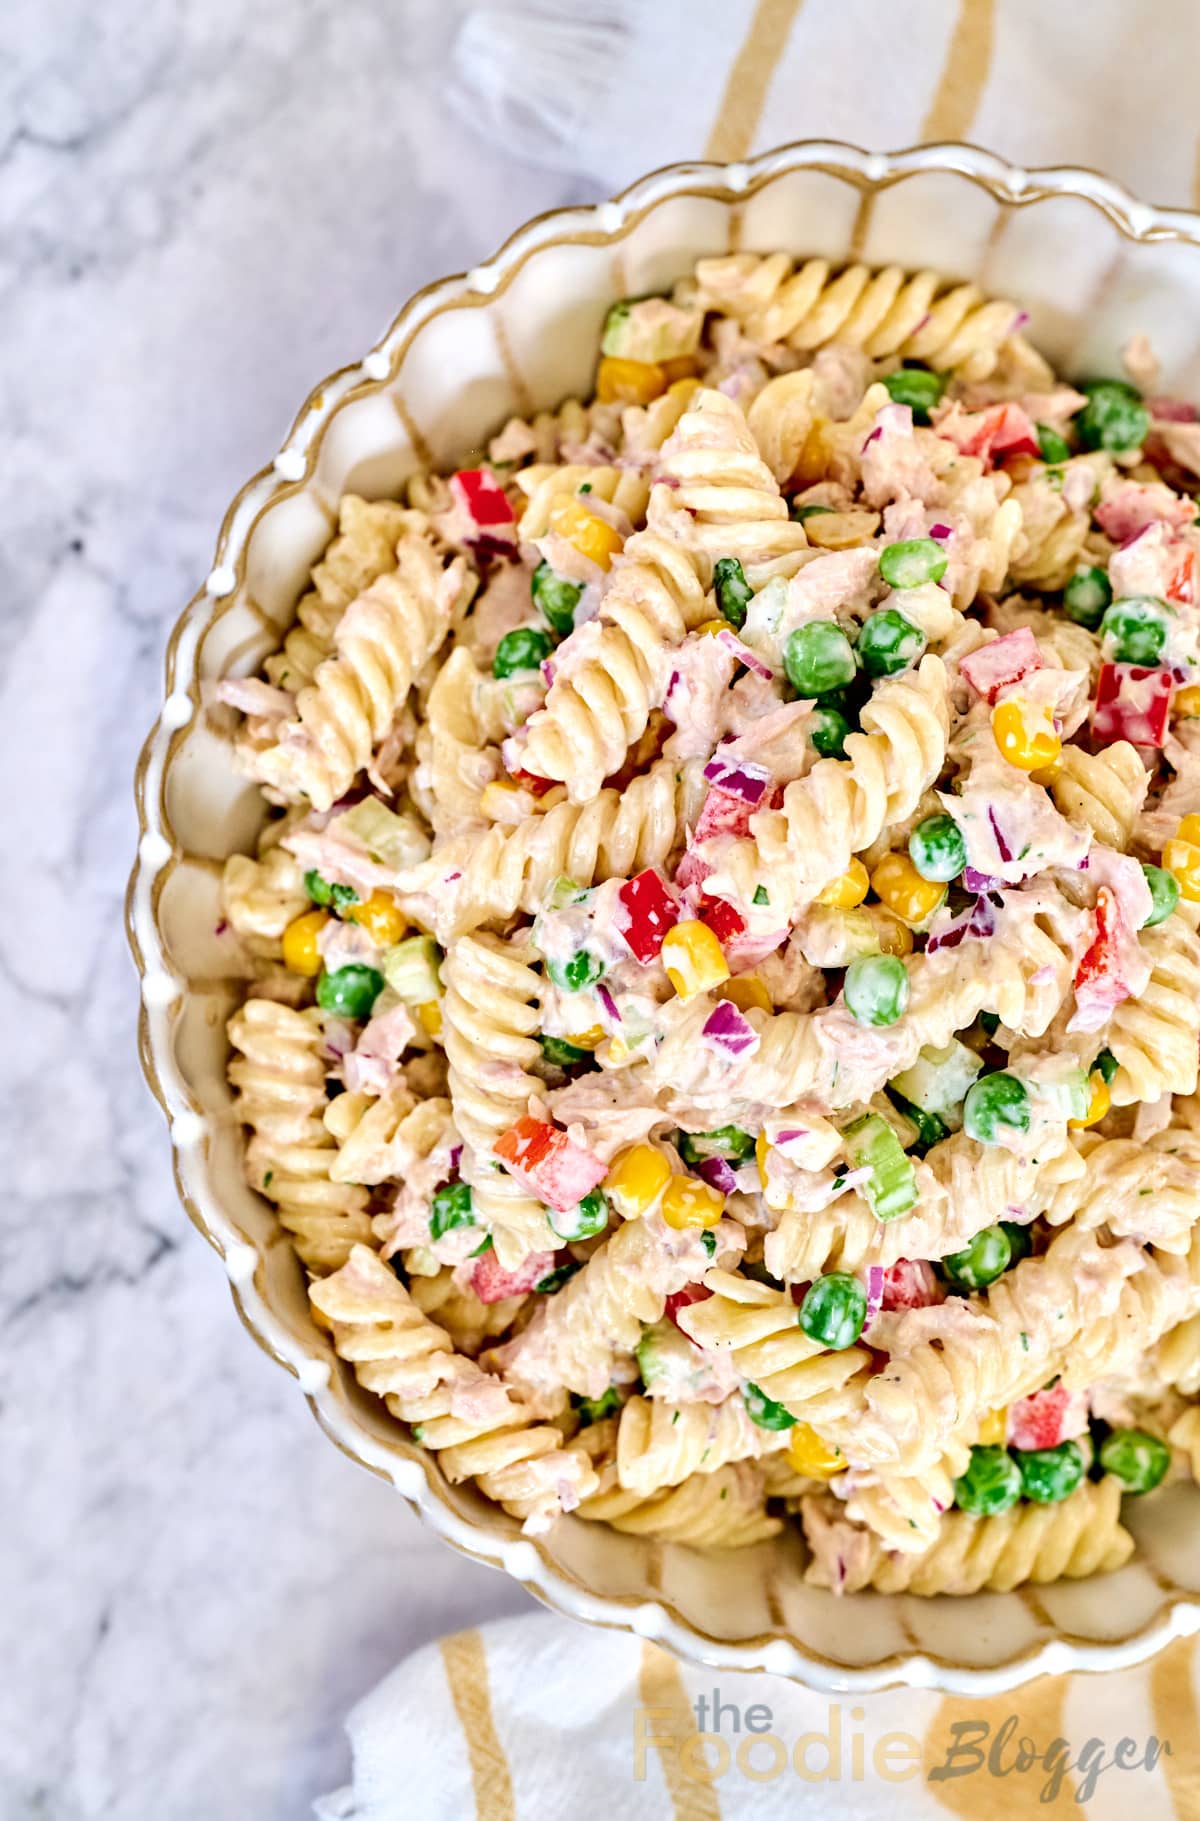 thefoodieblogger tuna pasta salad recipe 2